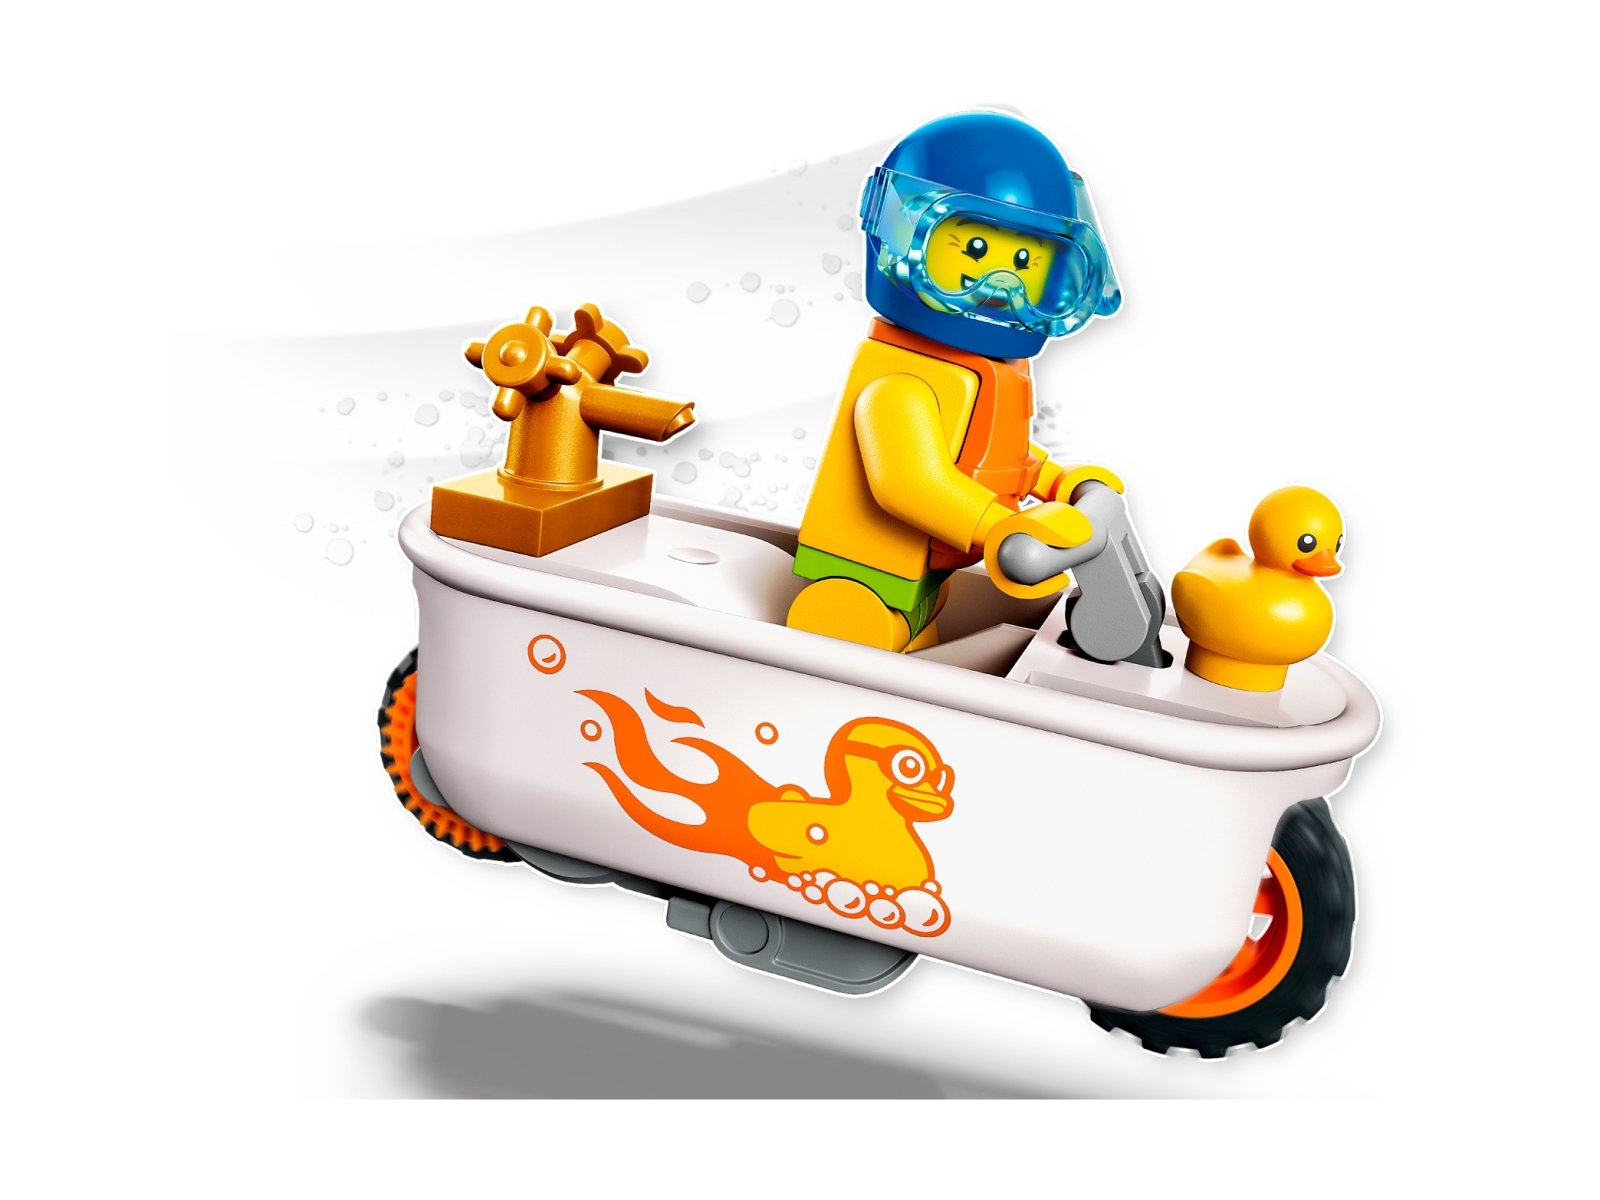 LEGO City Kaskaderski motocykl-wanna 60333